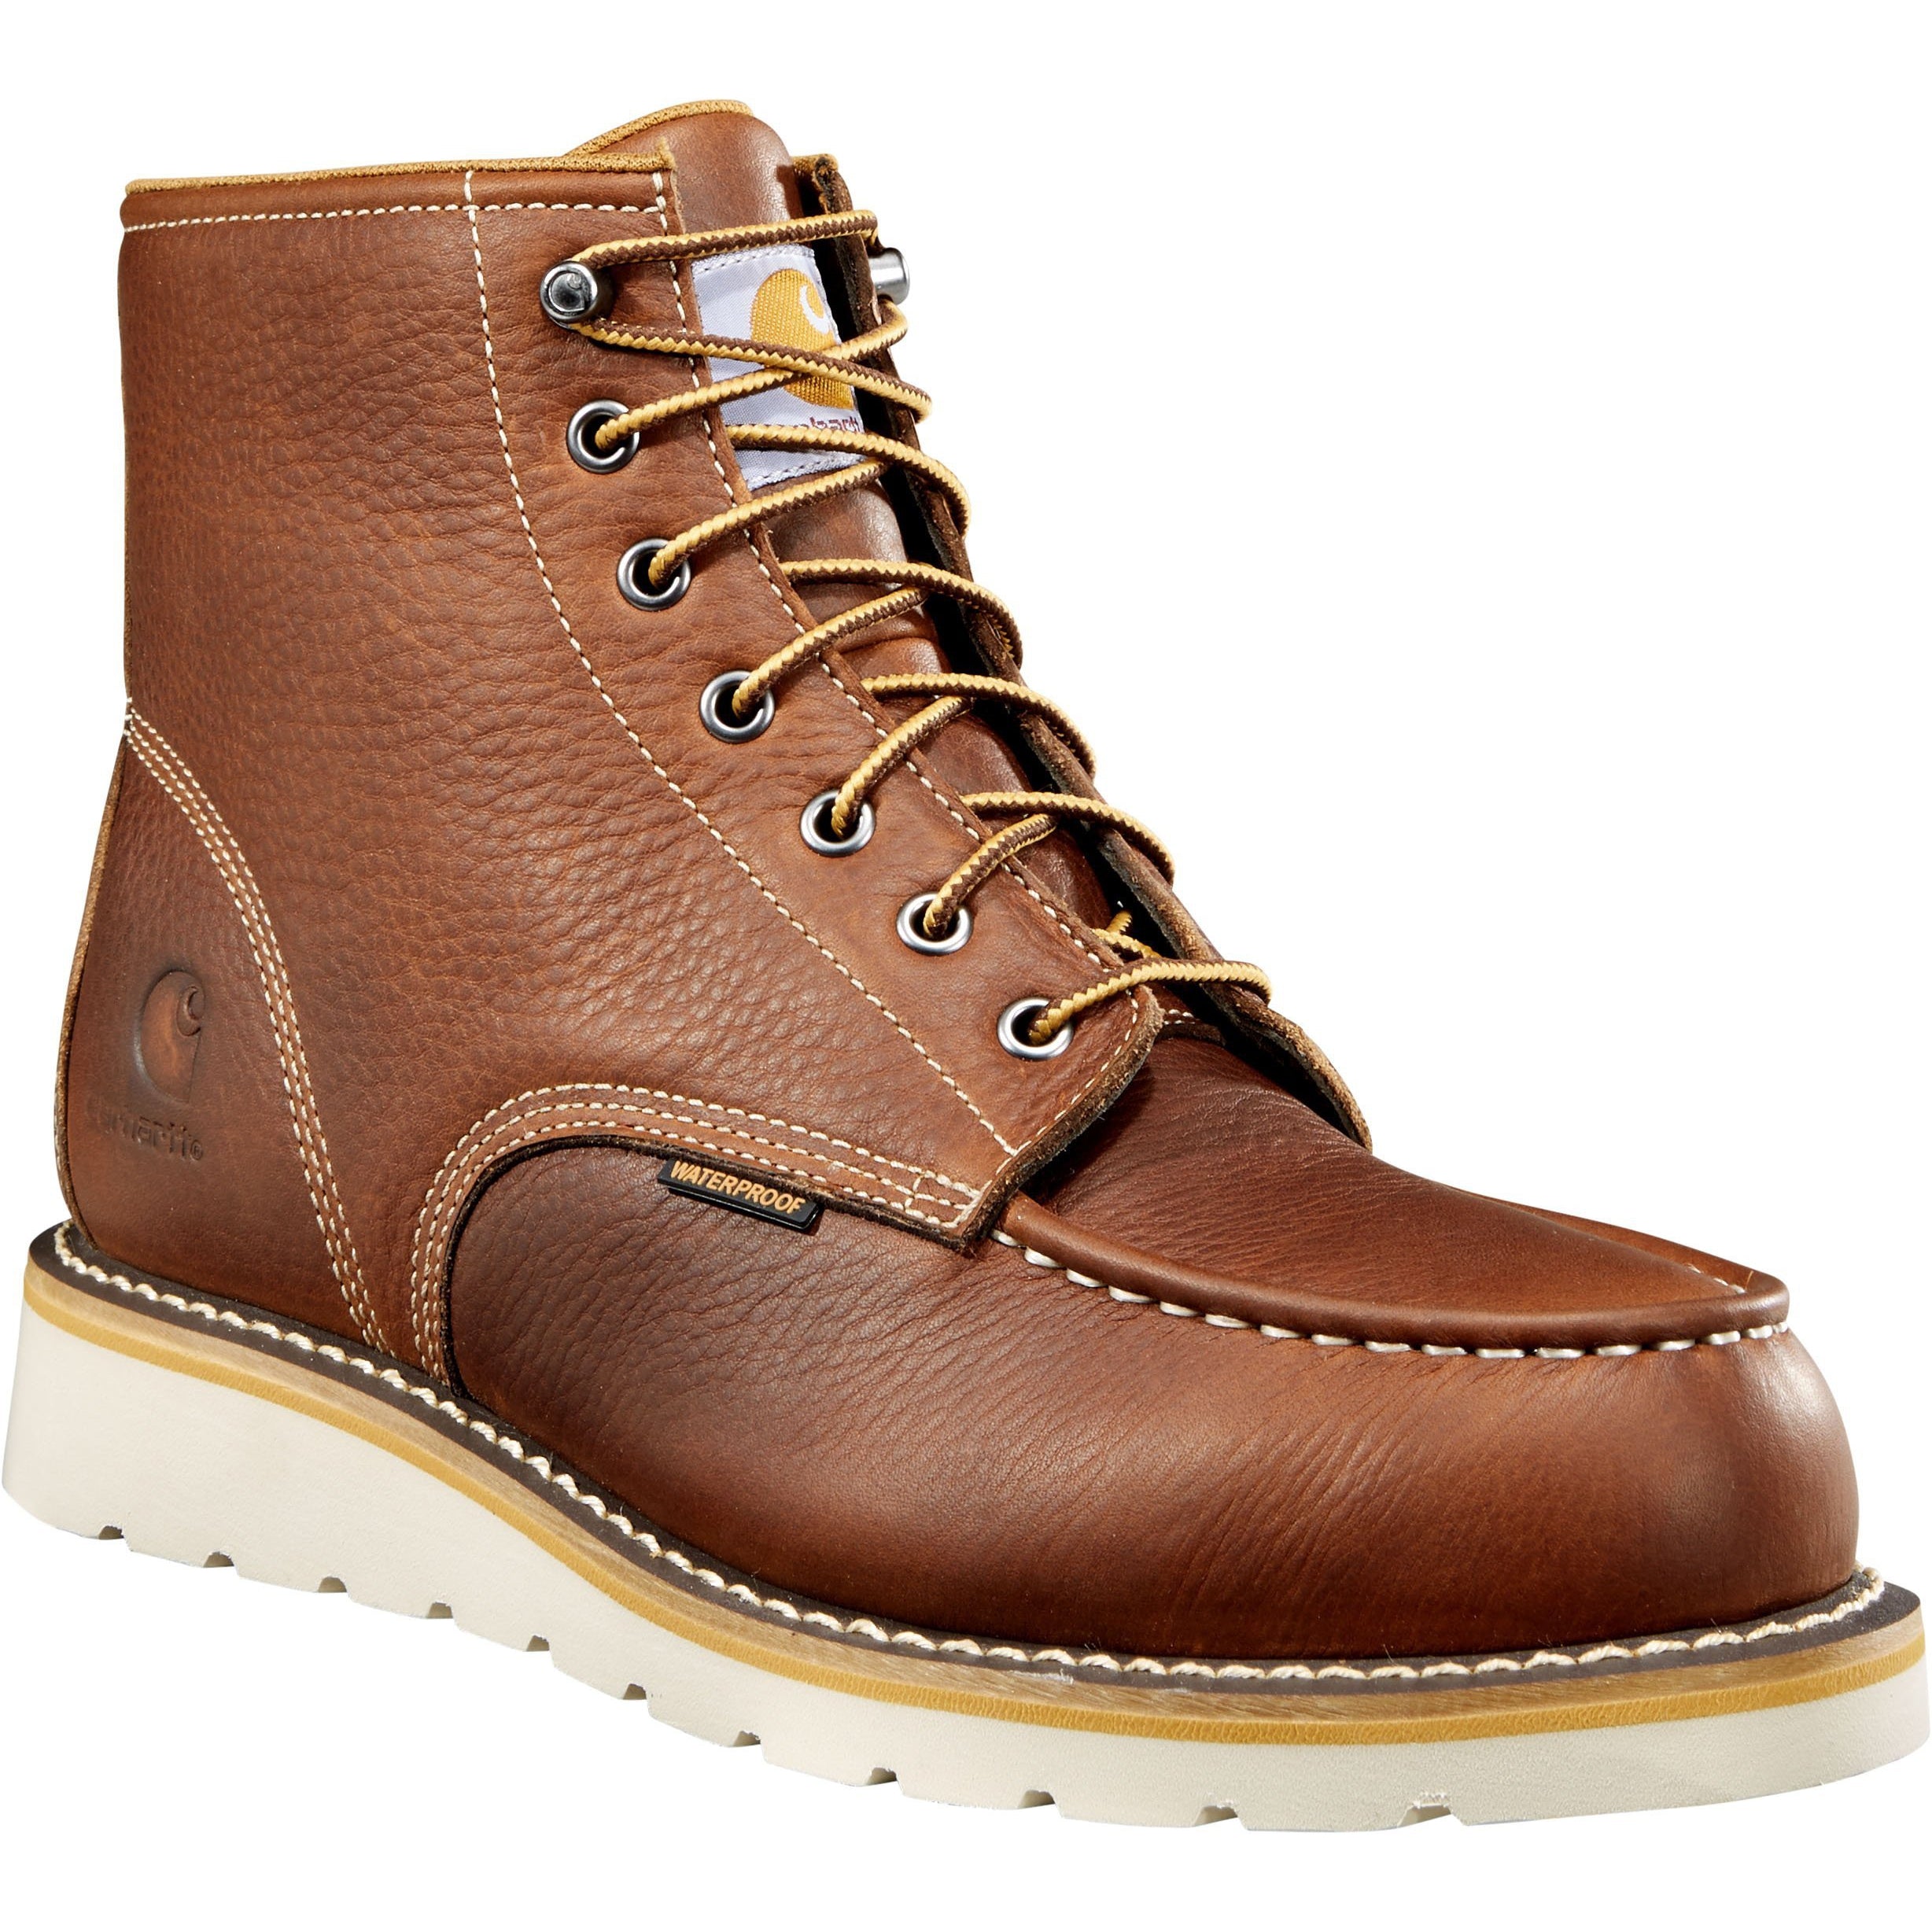 Carhartt Men's 6" Soft Toe Waterproof Wedge Work Boot - Tan - CMW6175 8 / Medium / Tan - Overlook Boots